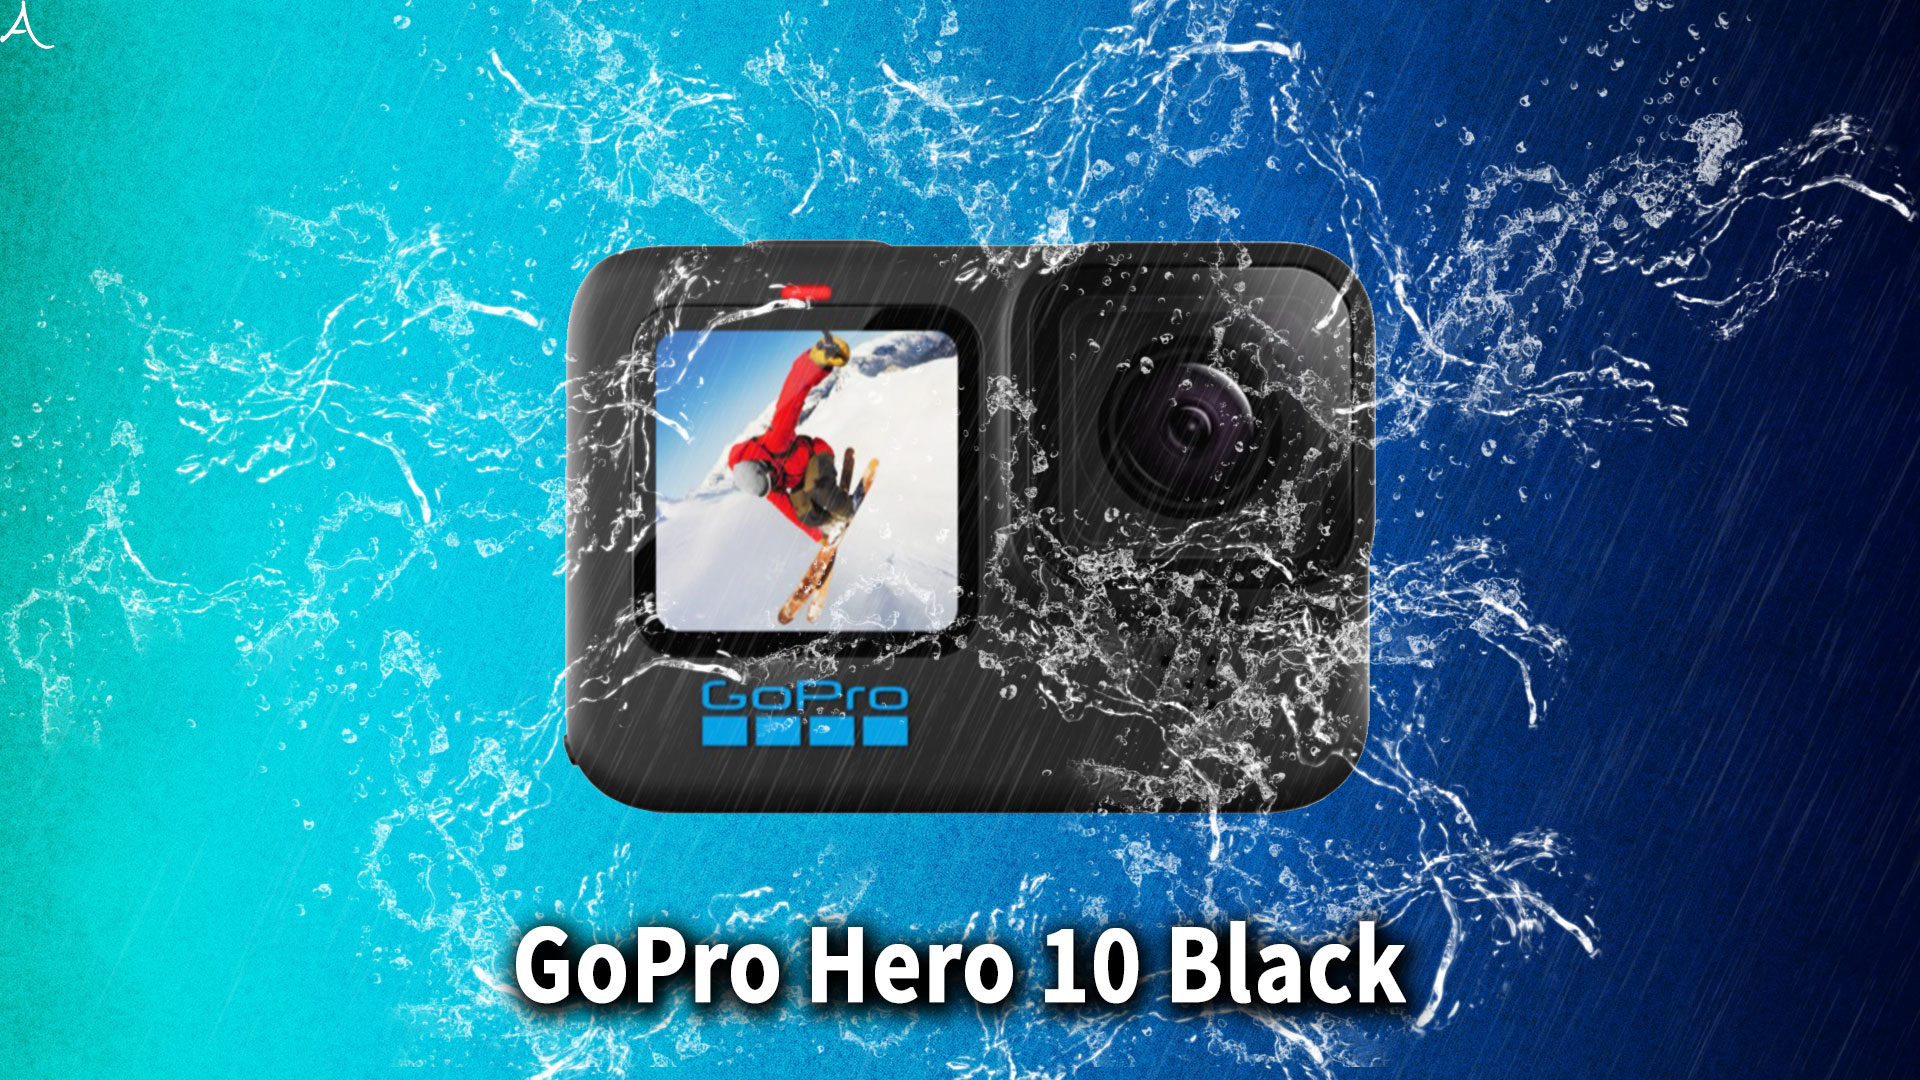 ｢GoPro Hero 10 Black｣のバッテリー持ちはどれくらい？互換性のあるおすすめのバッテリーはコレ！